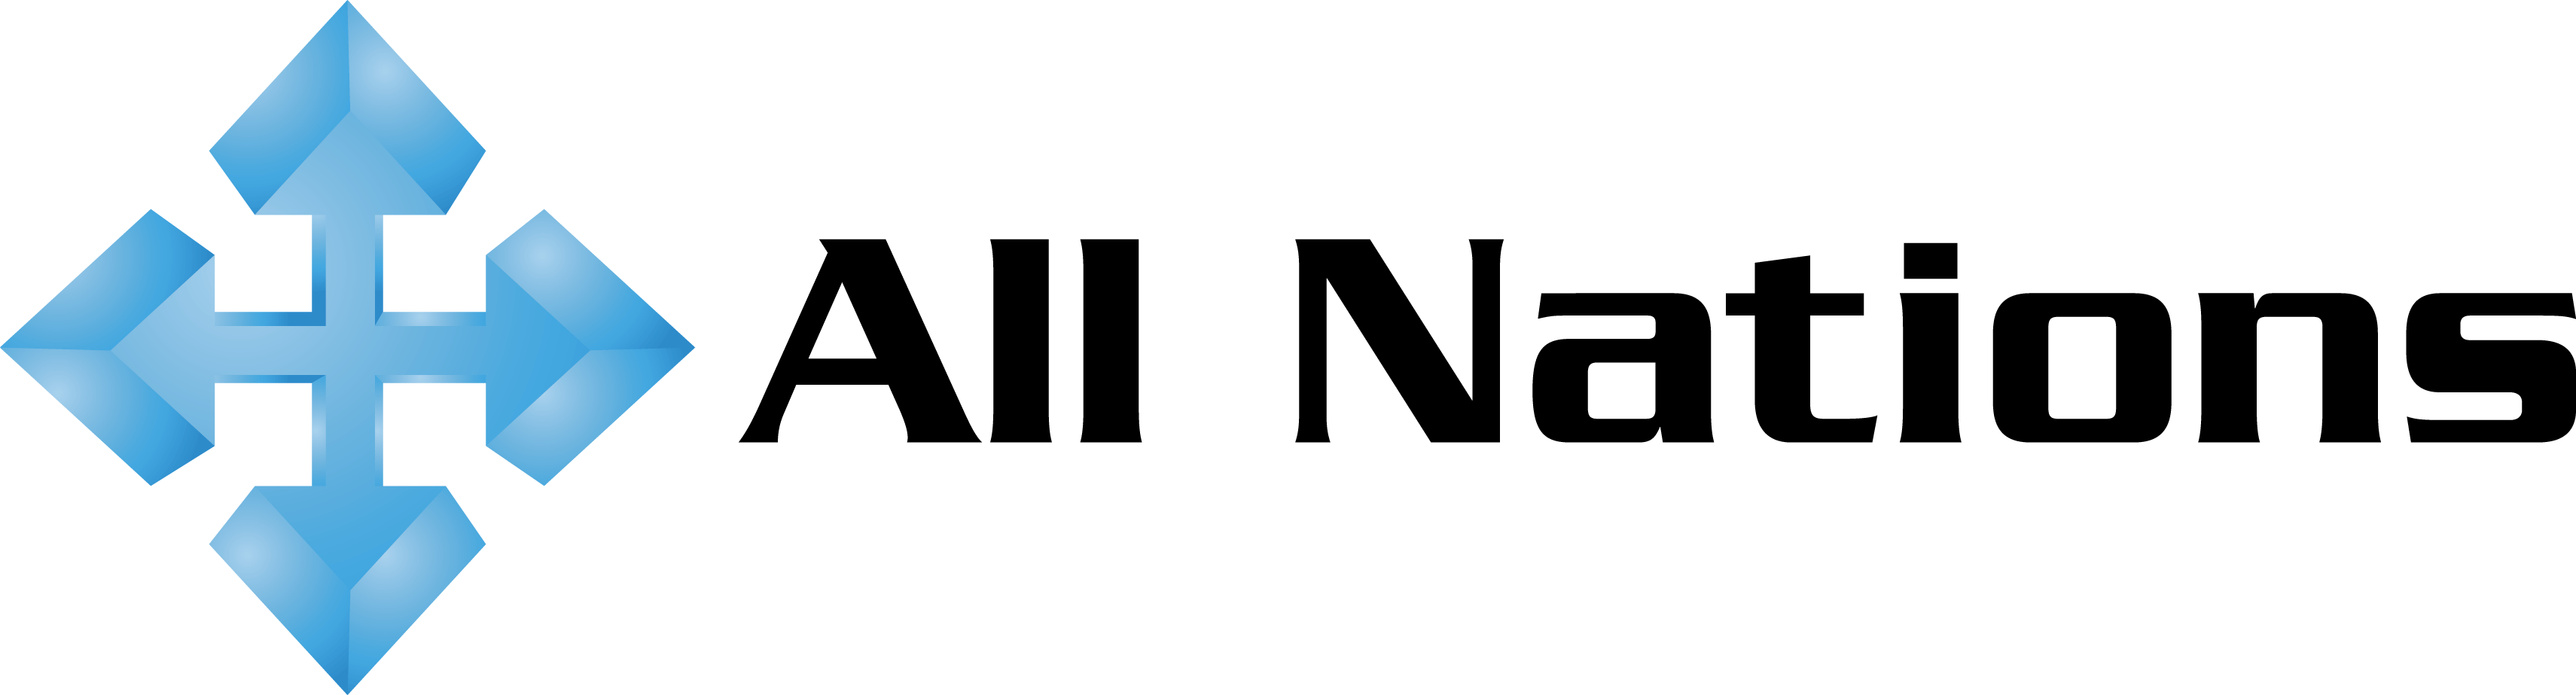 Grupo All Nations - Hicorp logo